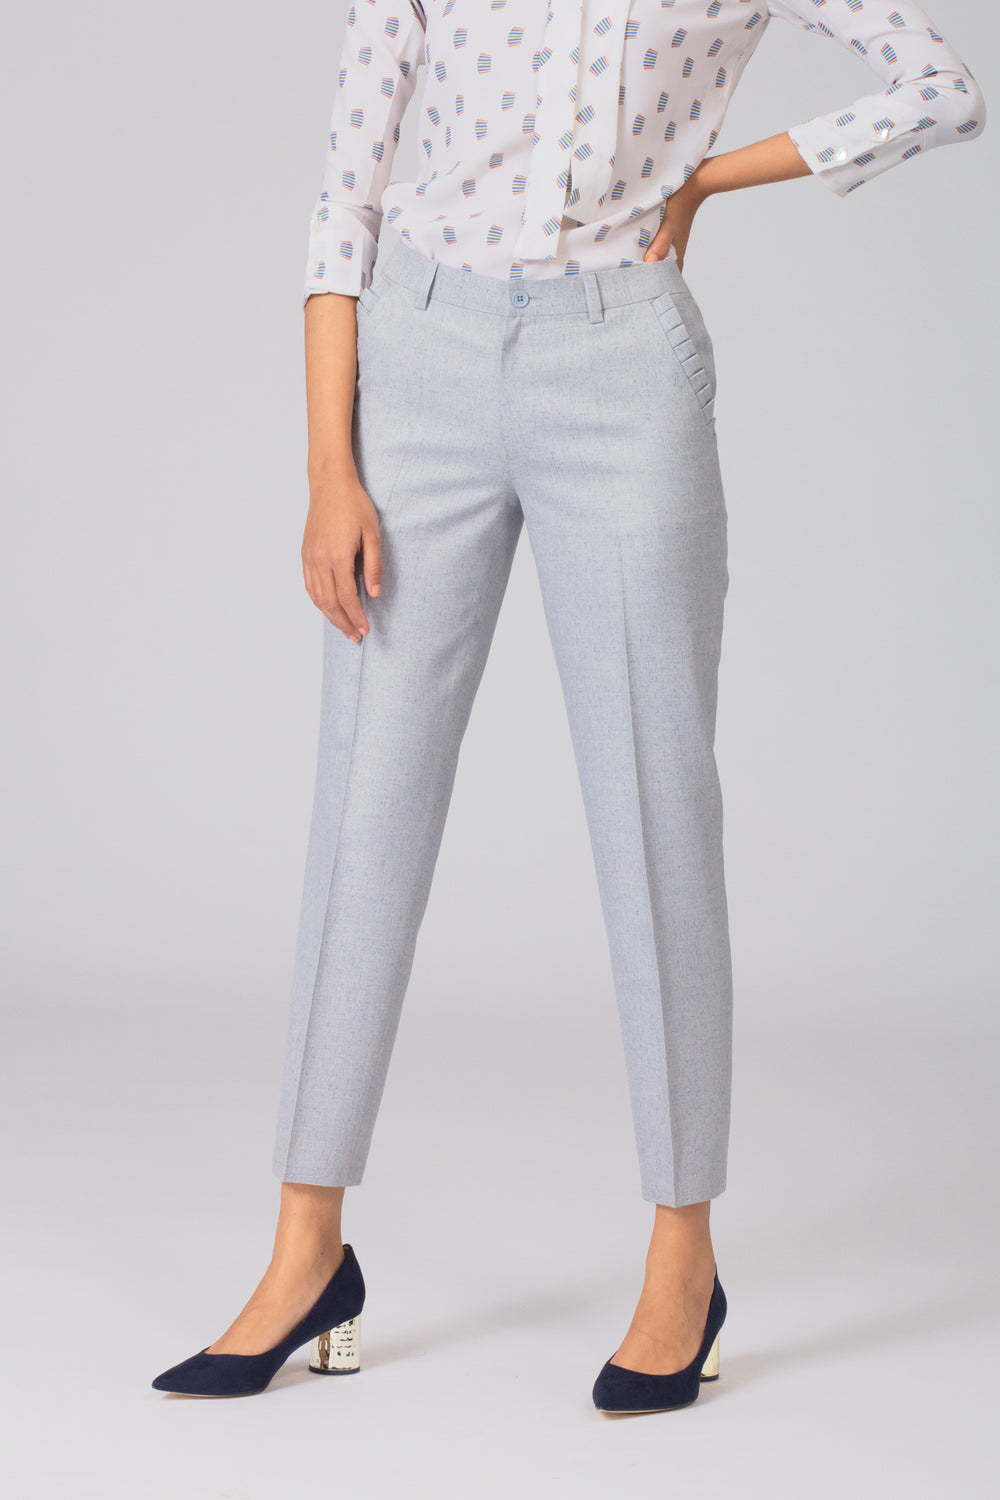 Buy Women Grey Print Formal Regular Fit Trousers Online  792166  Van  Heusen